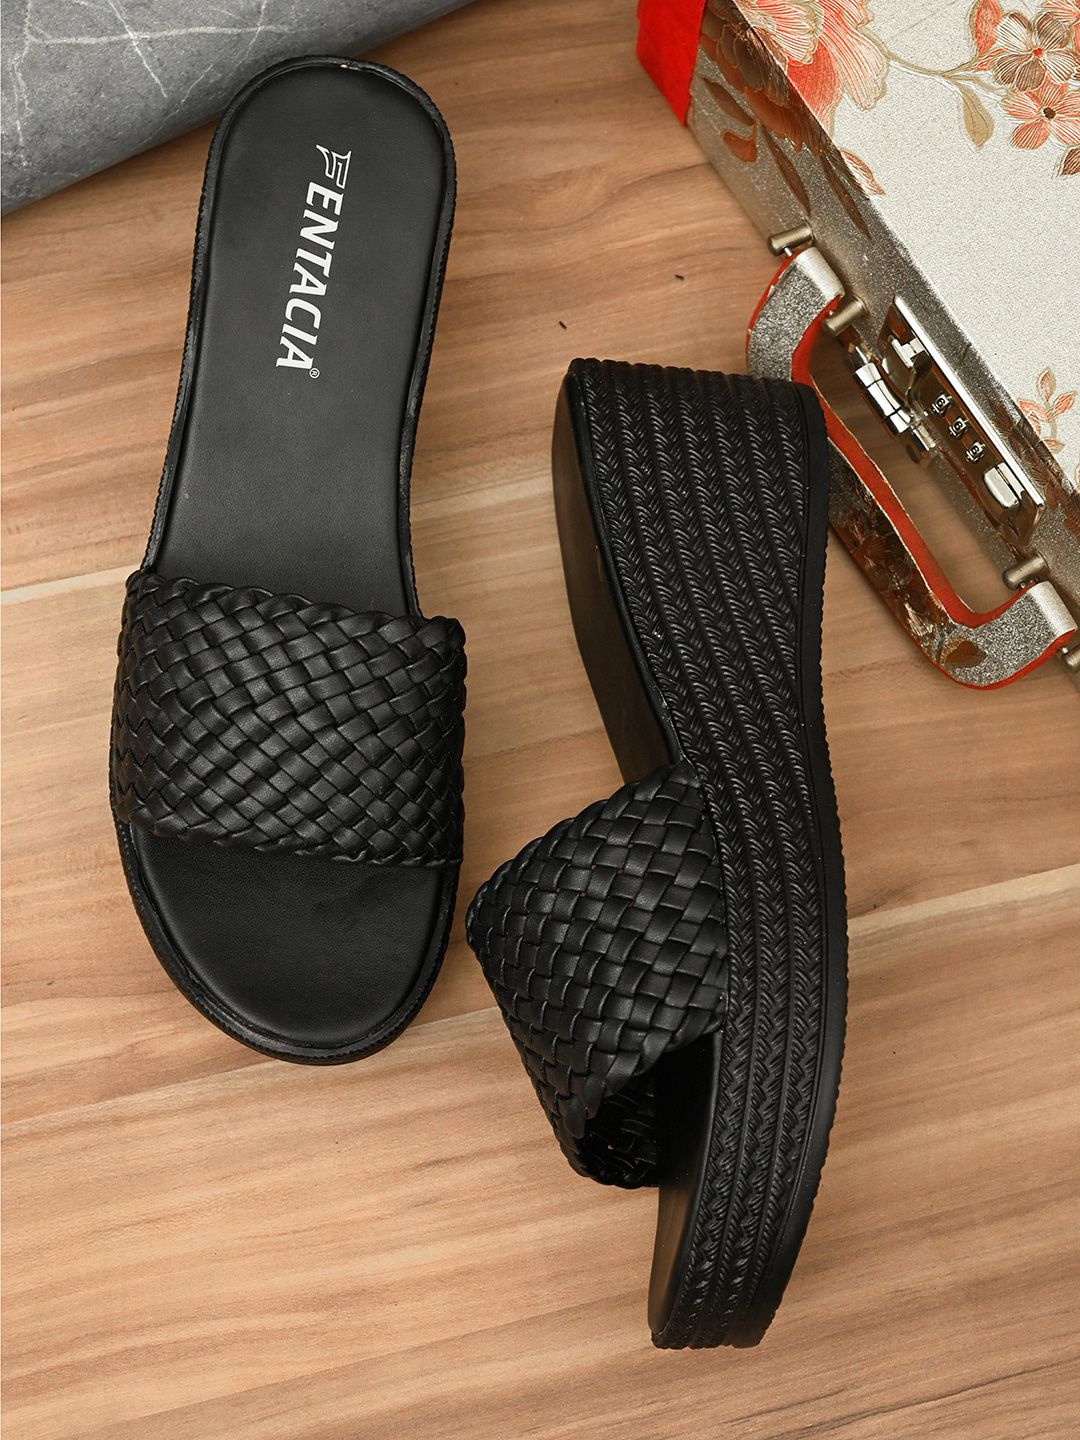 Fentacia Black Wedge Sandals Price in India